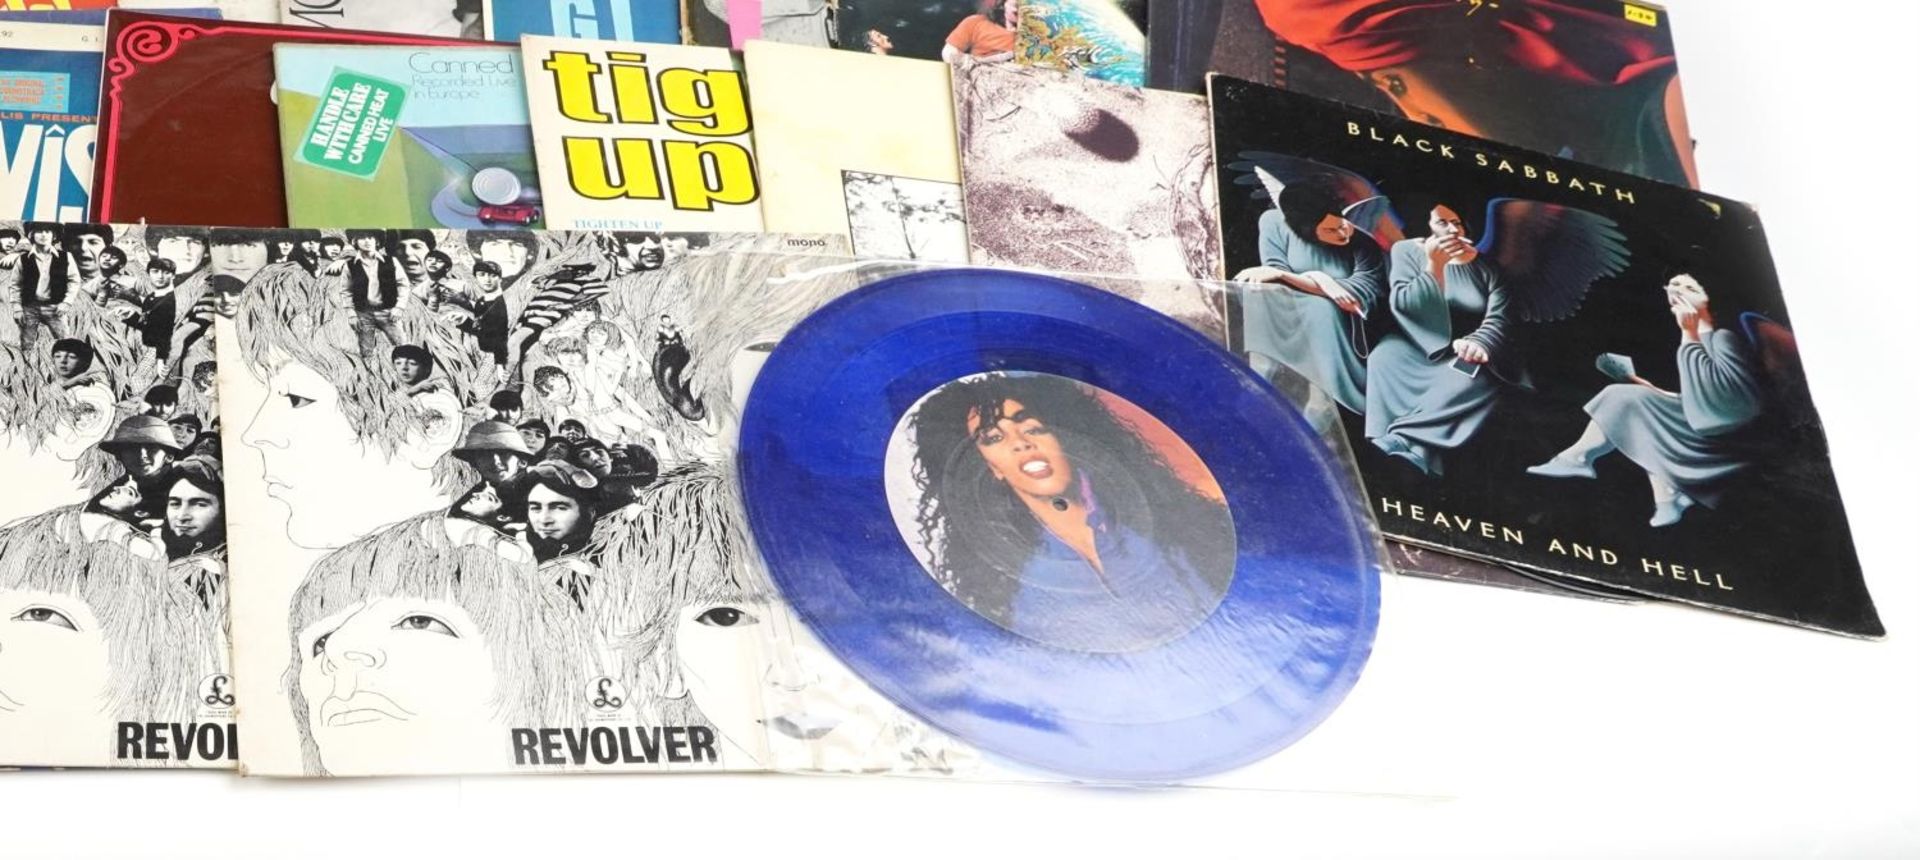 Vinyl LP records including Pink Floyd, Iron Maiden, The Beatles, David Bowie, Jack Bruce, AC/DC, - Bild 5 aus 5